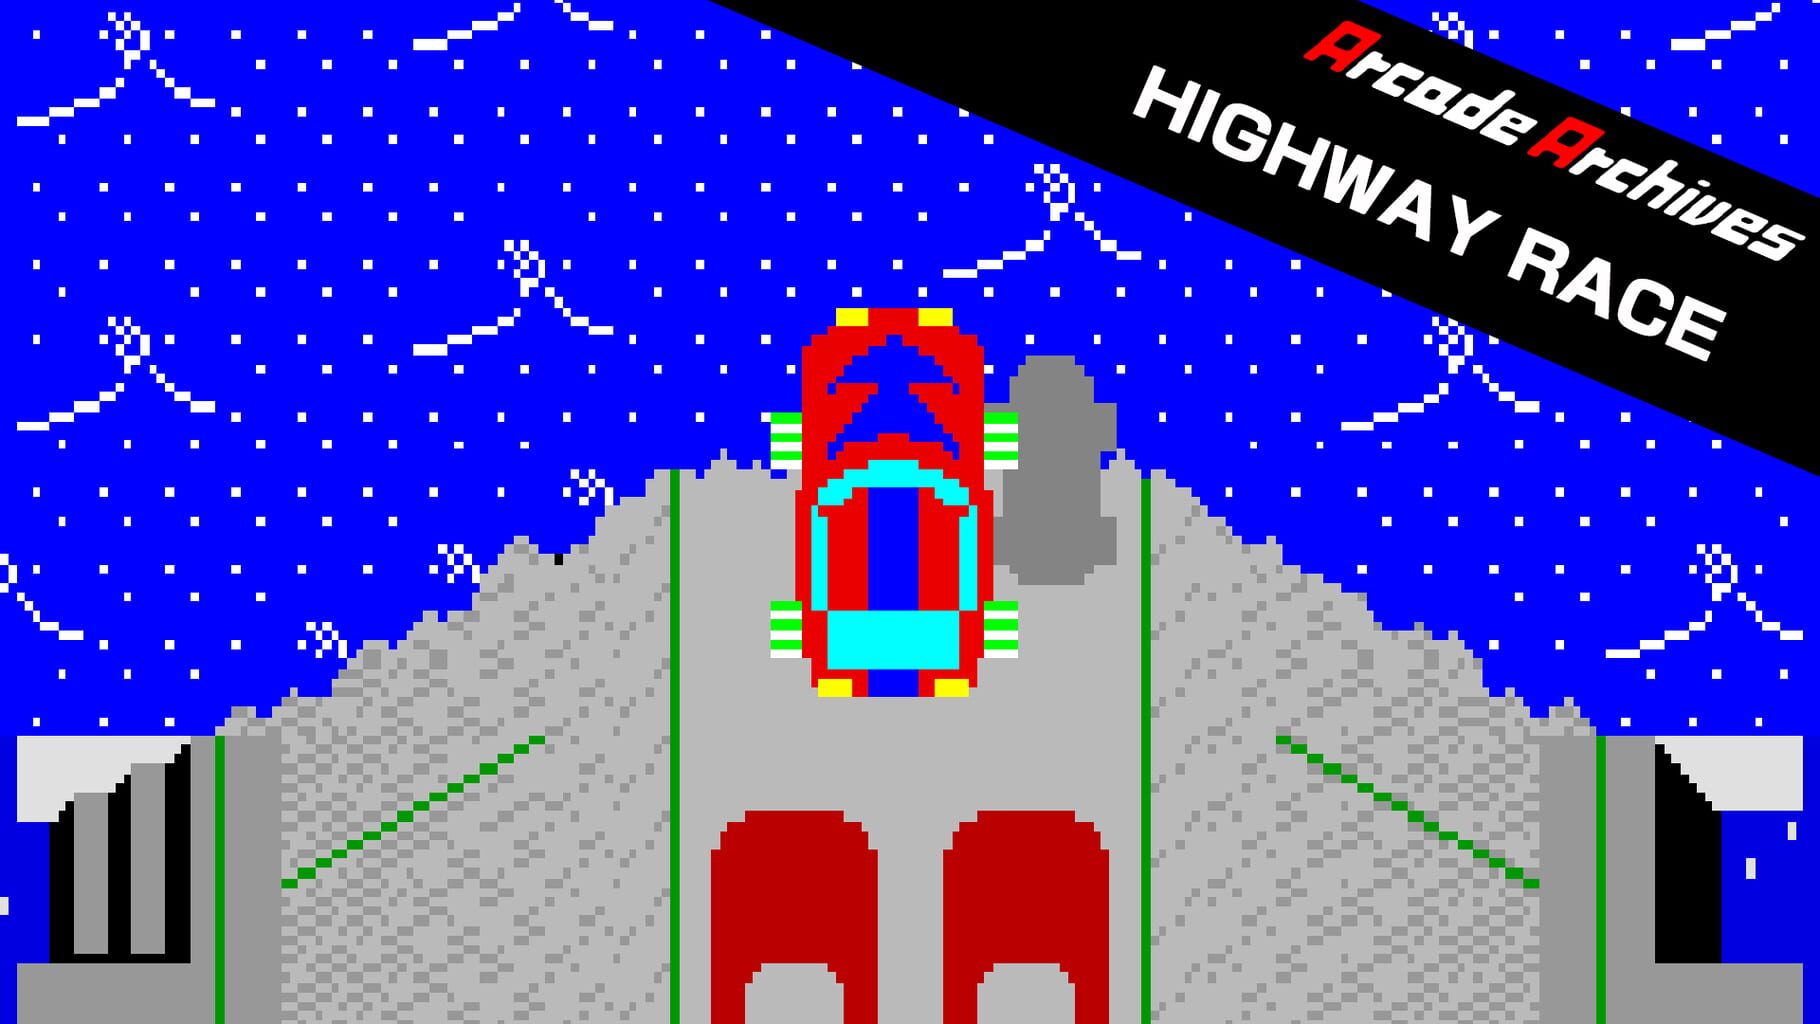 Arcade Archives: Highway Race artwork